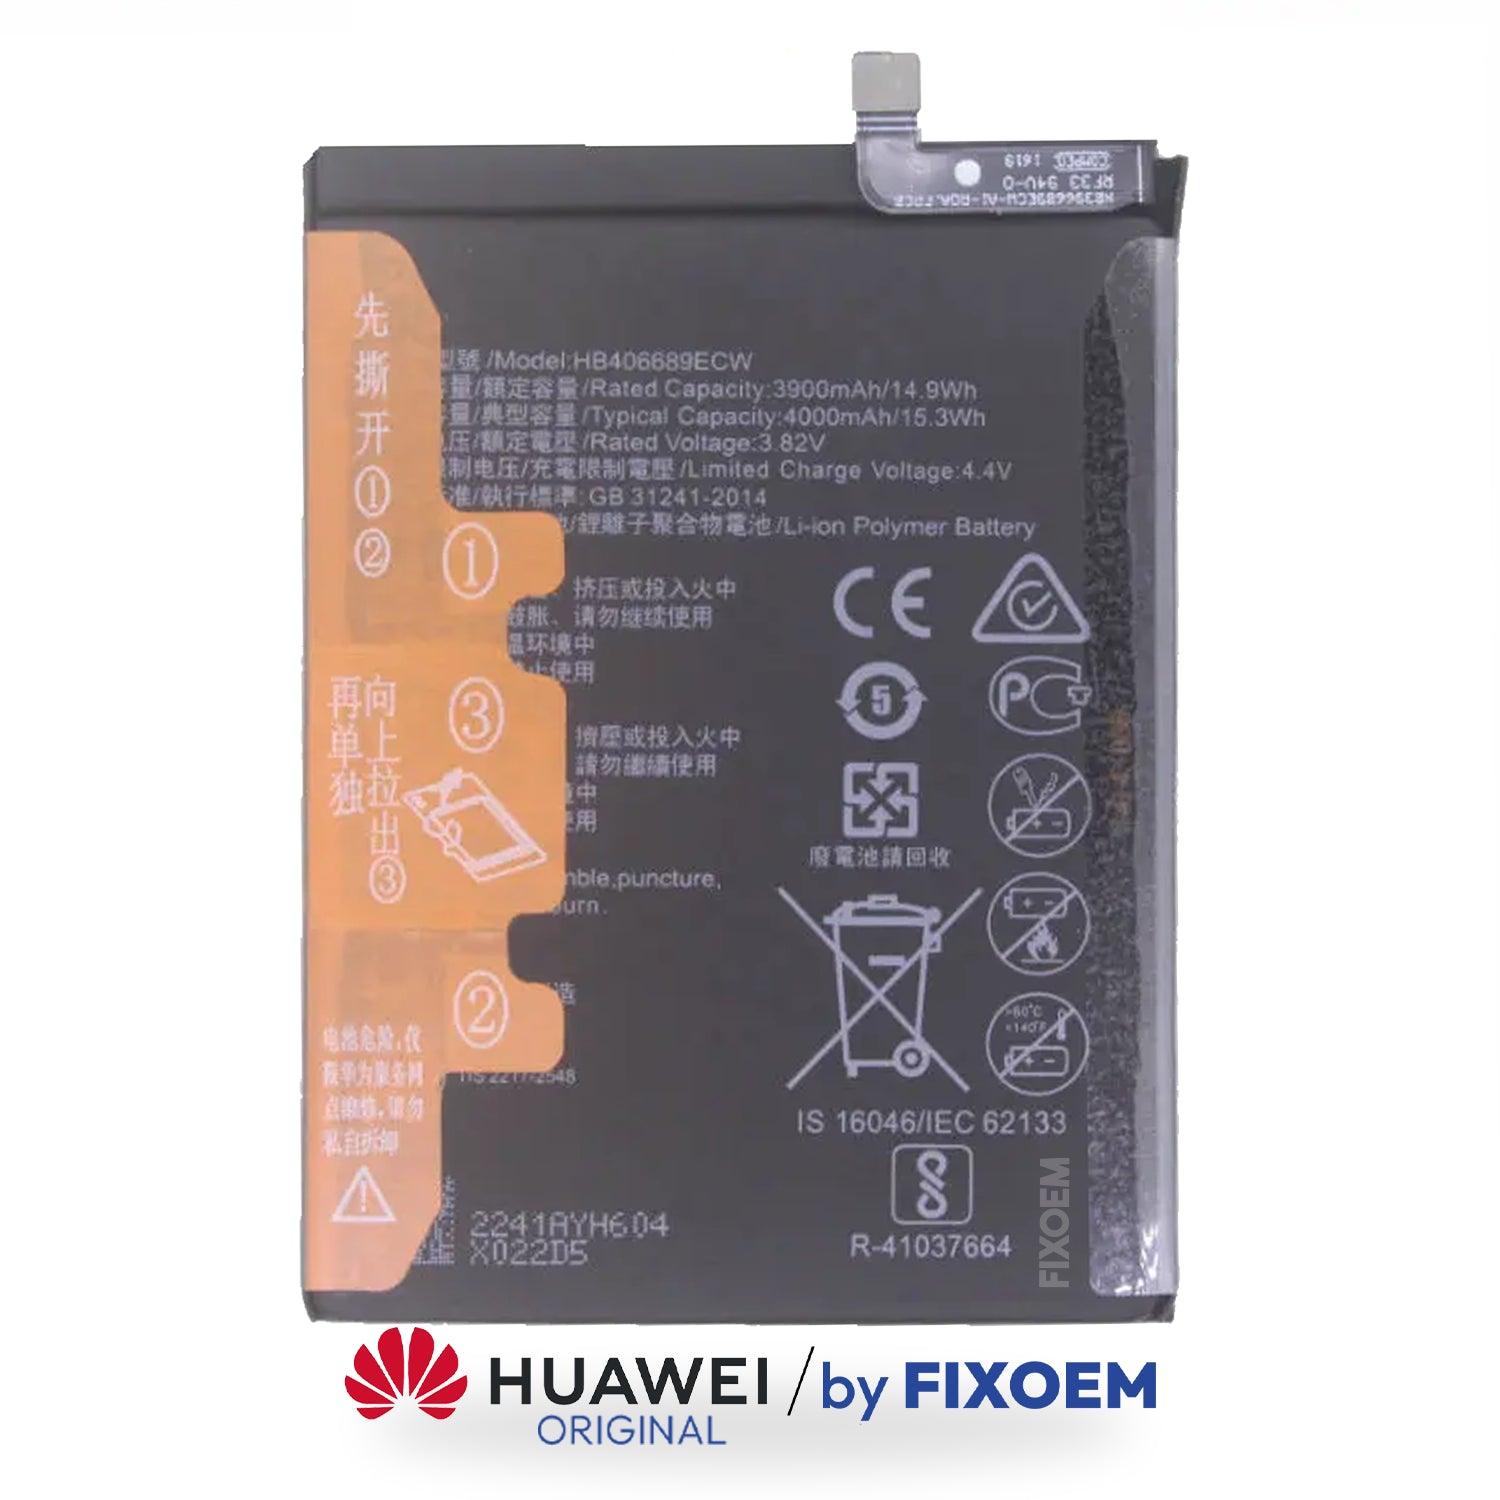 Bateria Huawei Y9 2019/ Mate 9 Pro/ Y9 2019/Y7P/Y7 Prime/ Enjoy 7 Plus Hb406689Ecw |+2,000 reseñas 4.8/5 ⭐